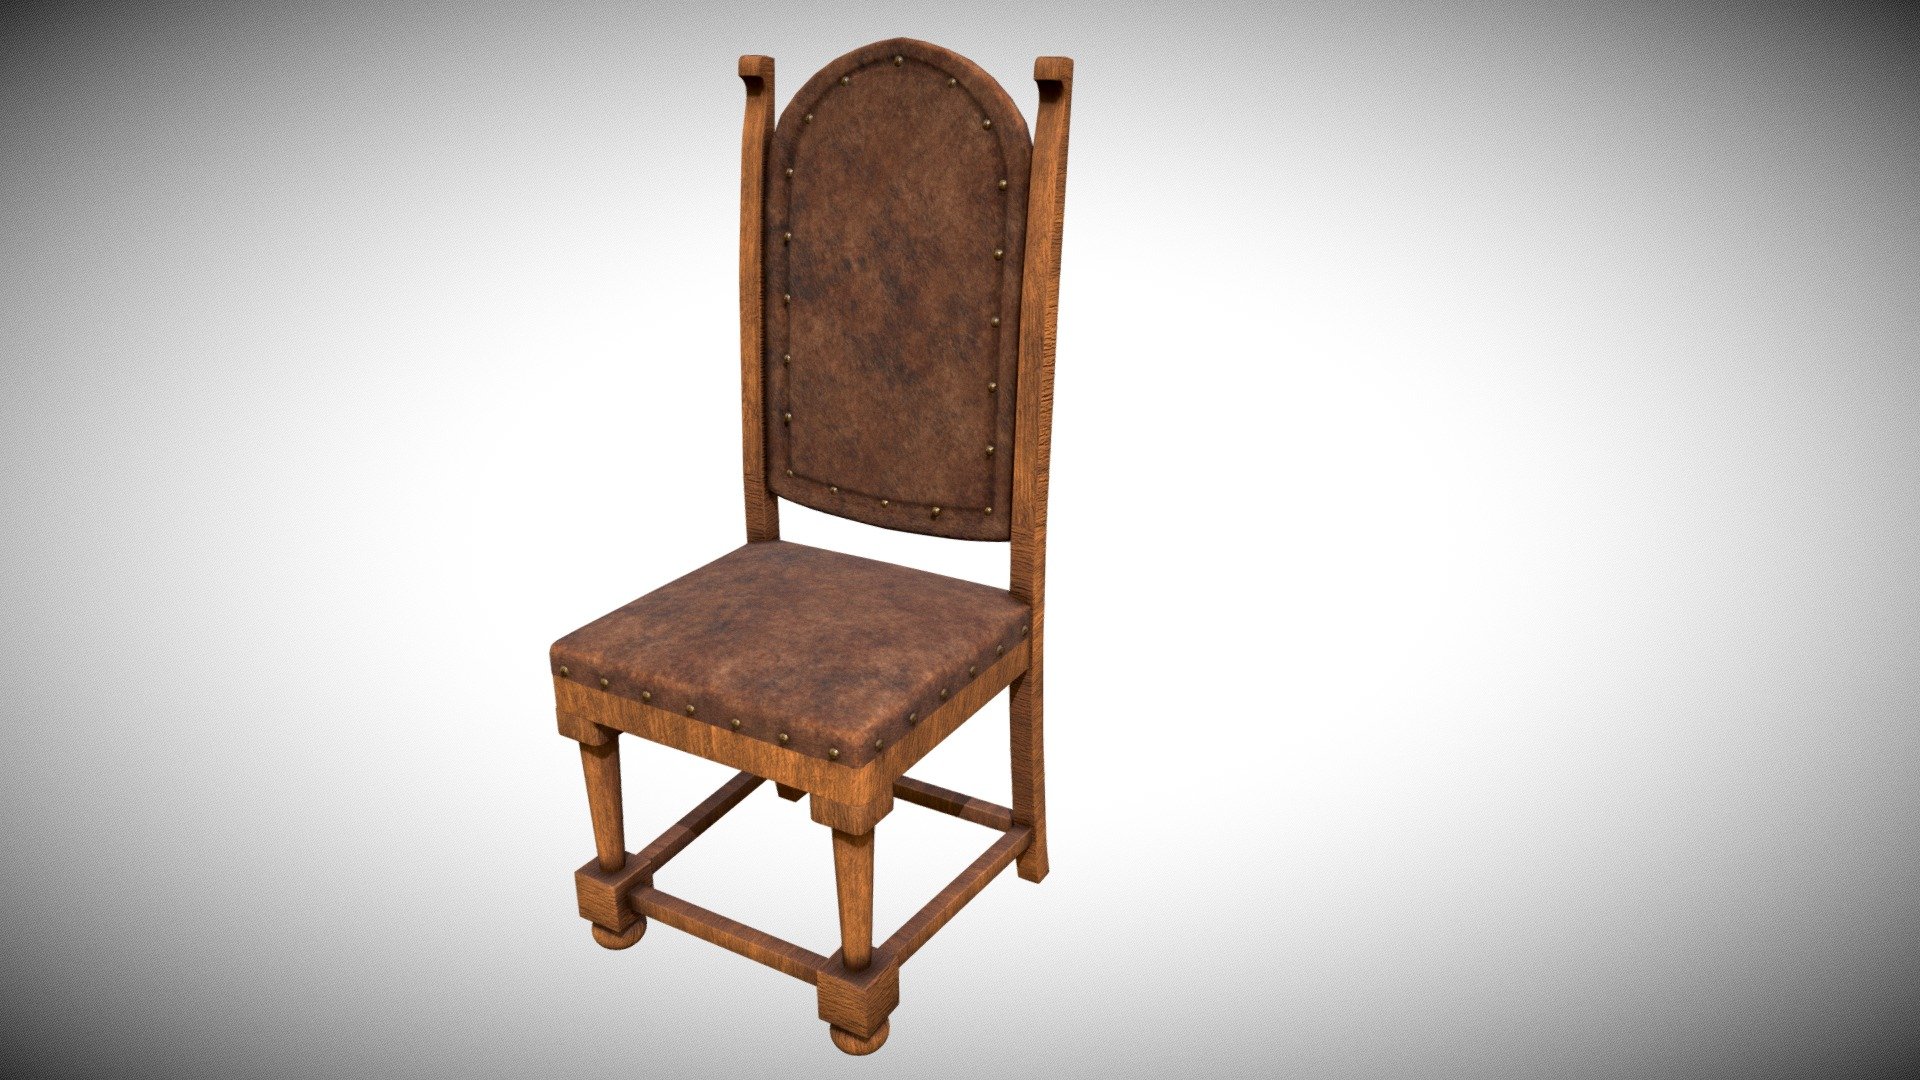 Old Chair Download Free 3d Model By Bakanov Vladimir2016 [264c787] Sketchfab